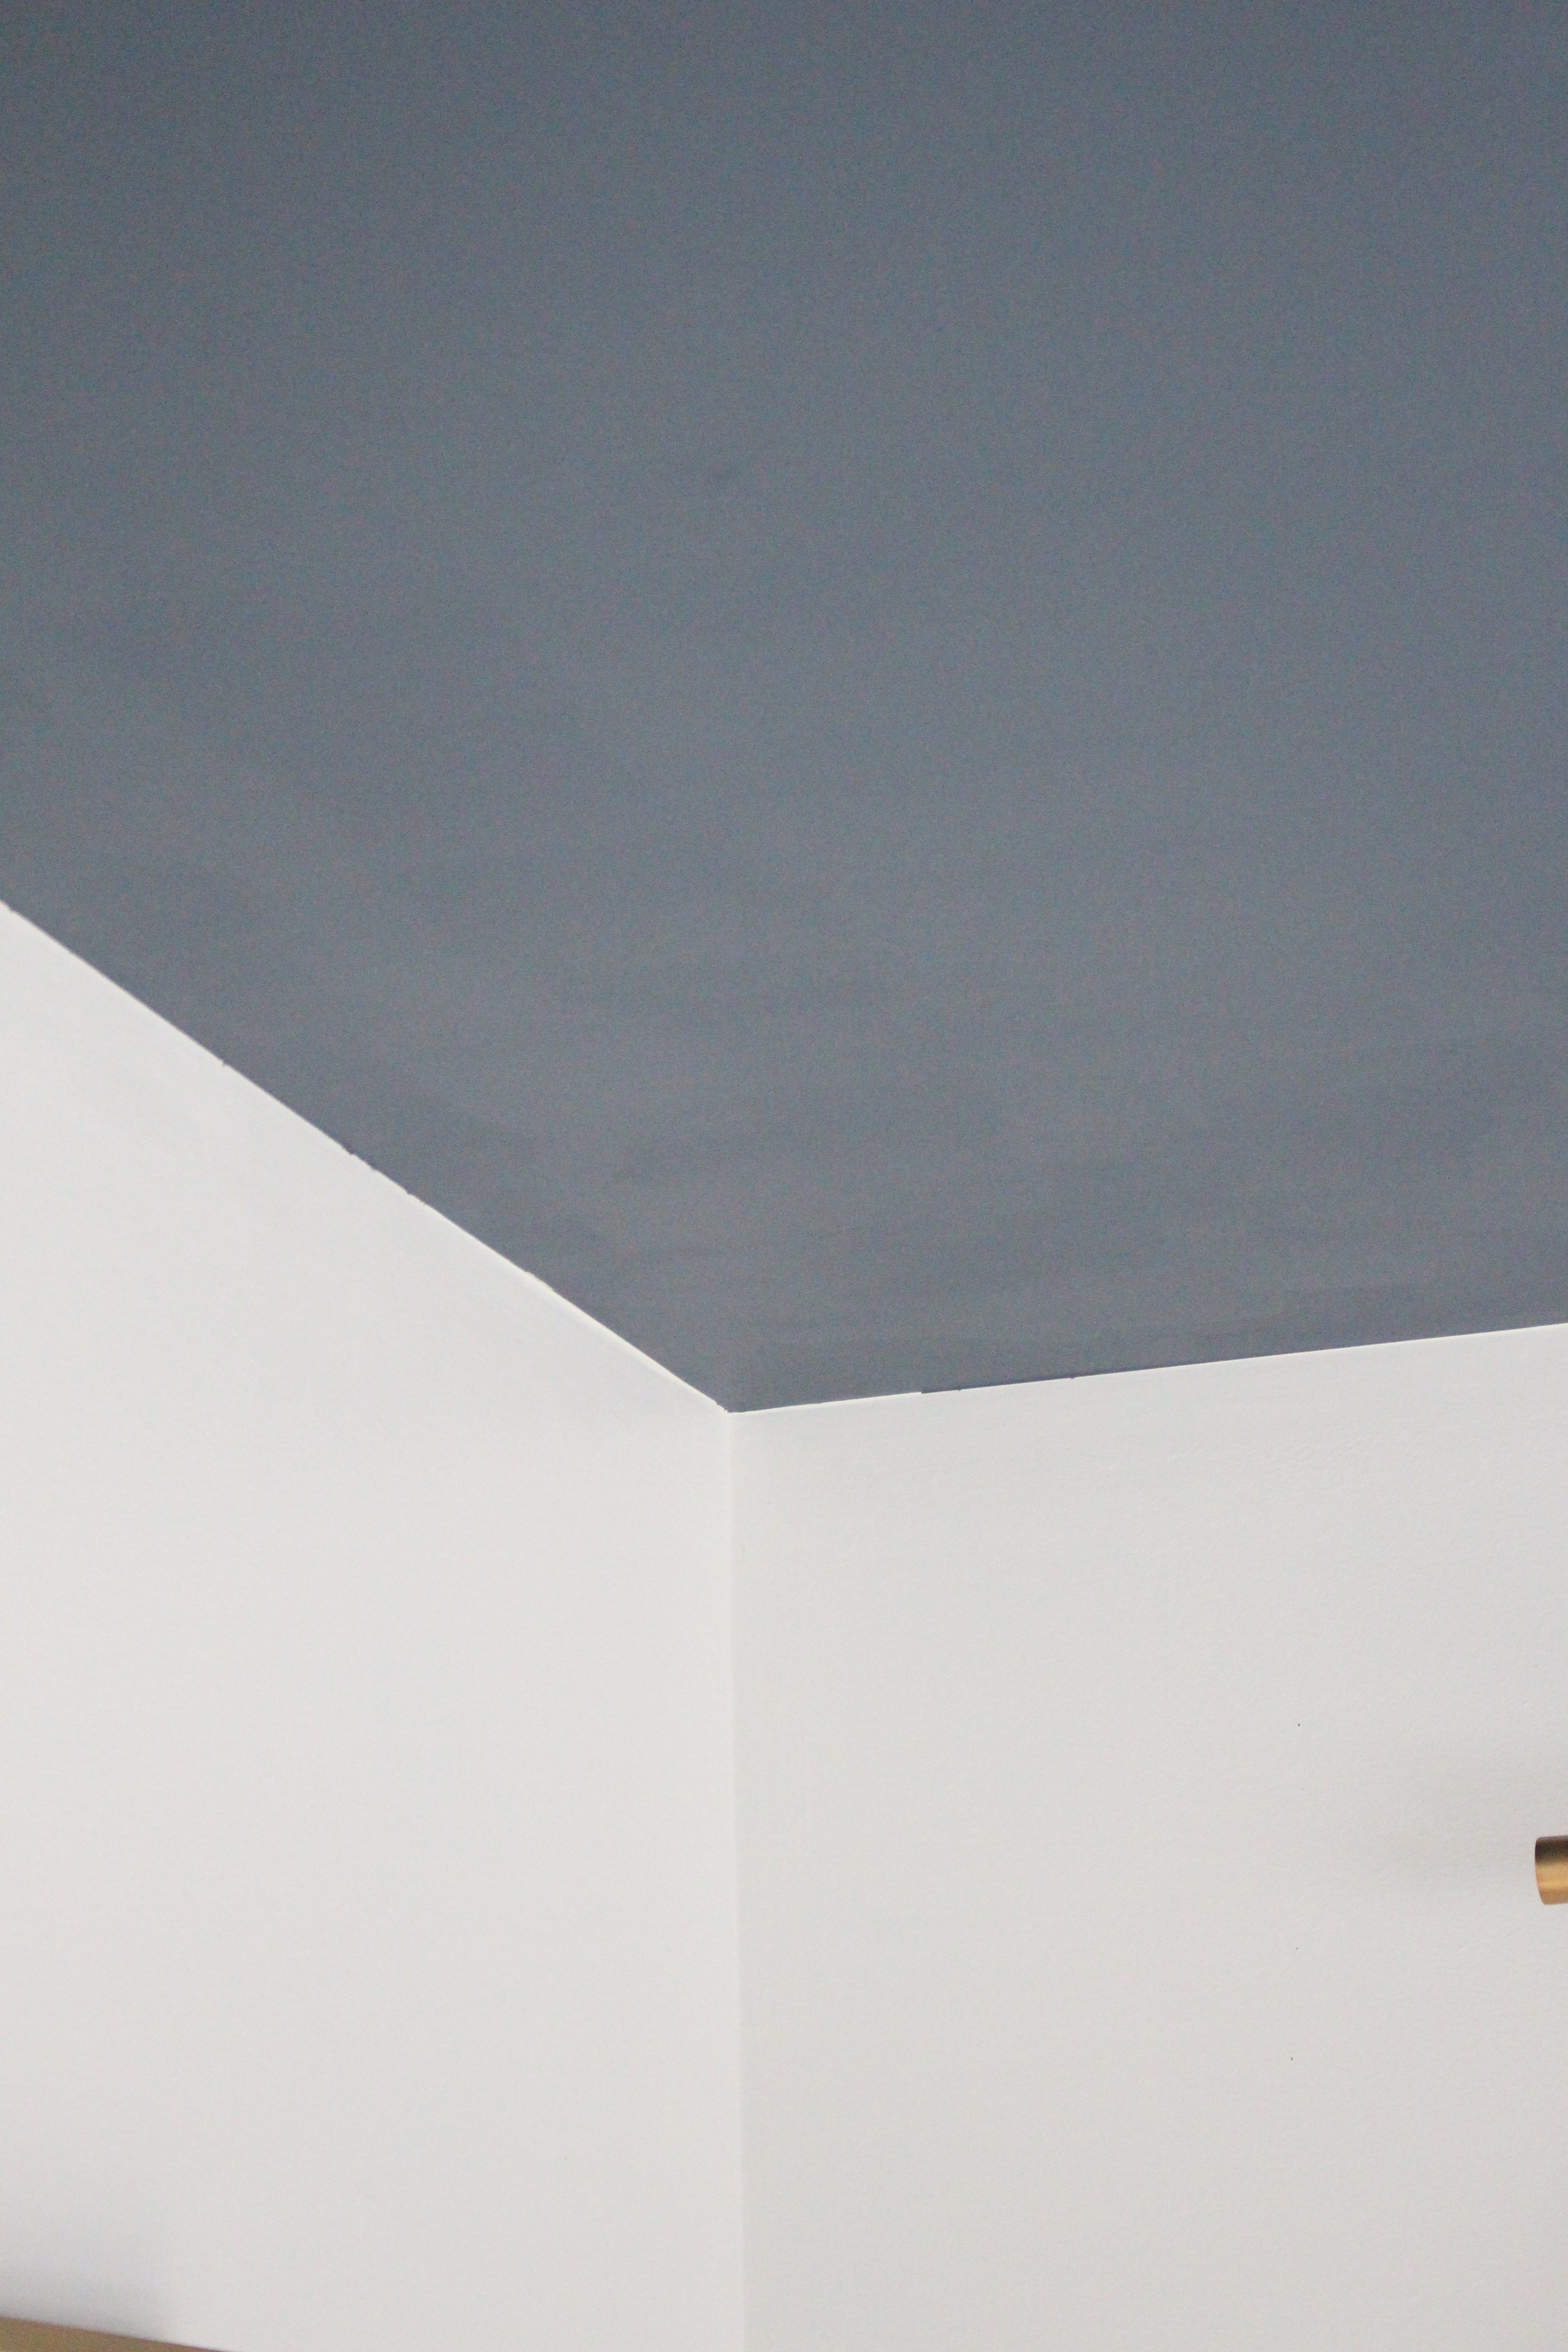 Painted ceiling- modern bedroom space- paint- ceiling painted